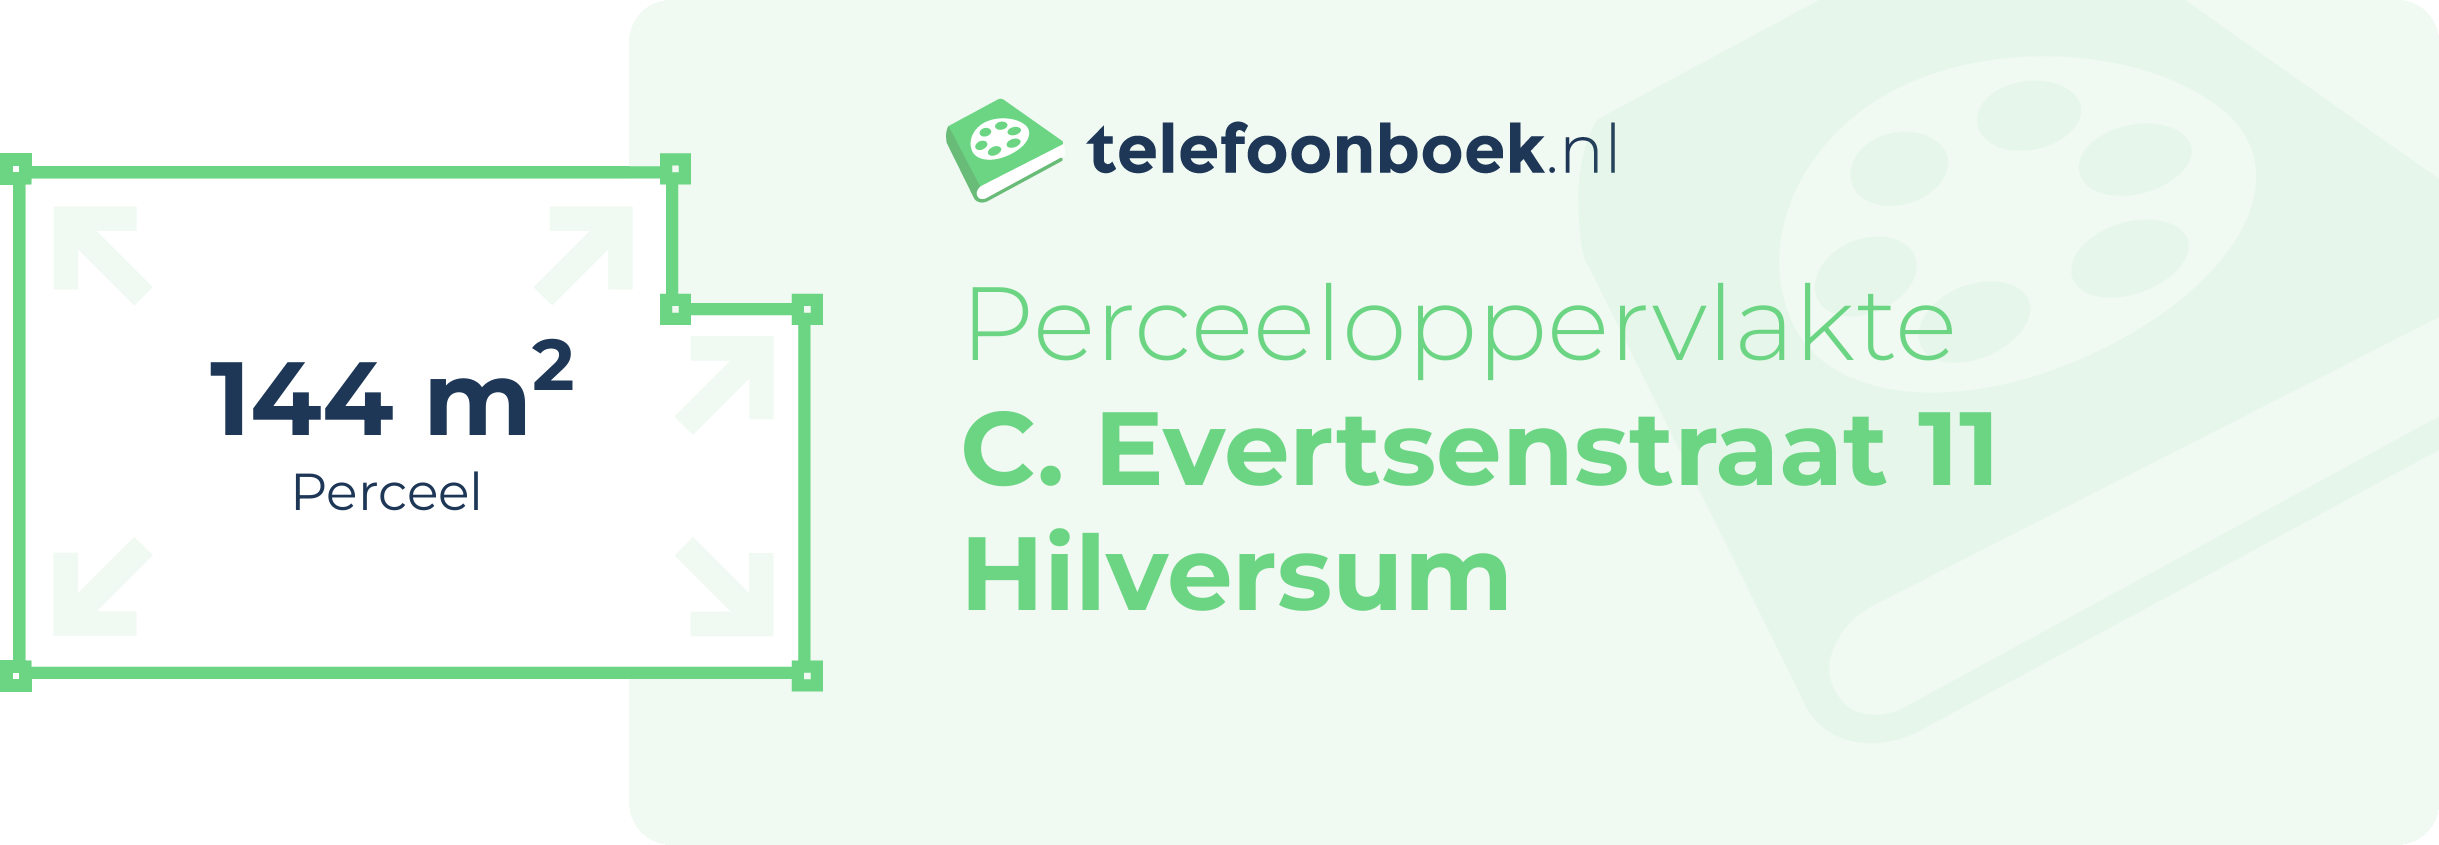 Perceeloppervlakte C. Evertsenstraat 11 Hilversum